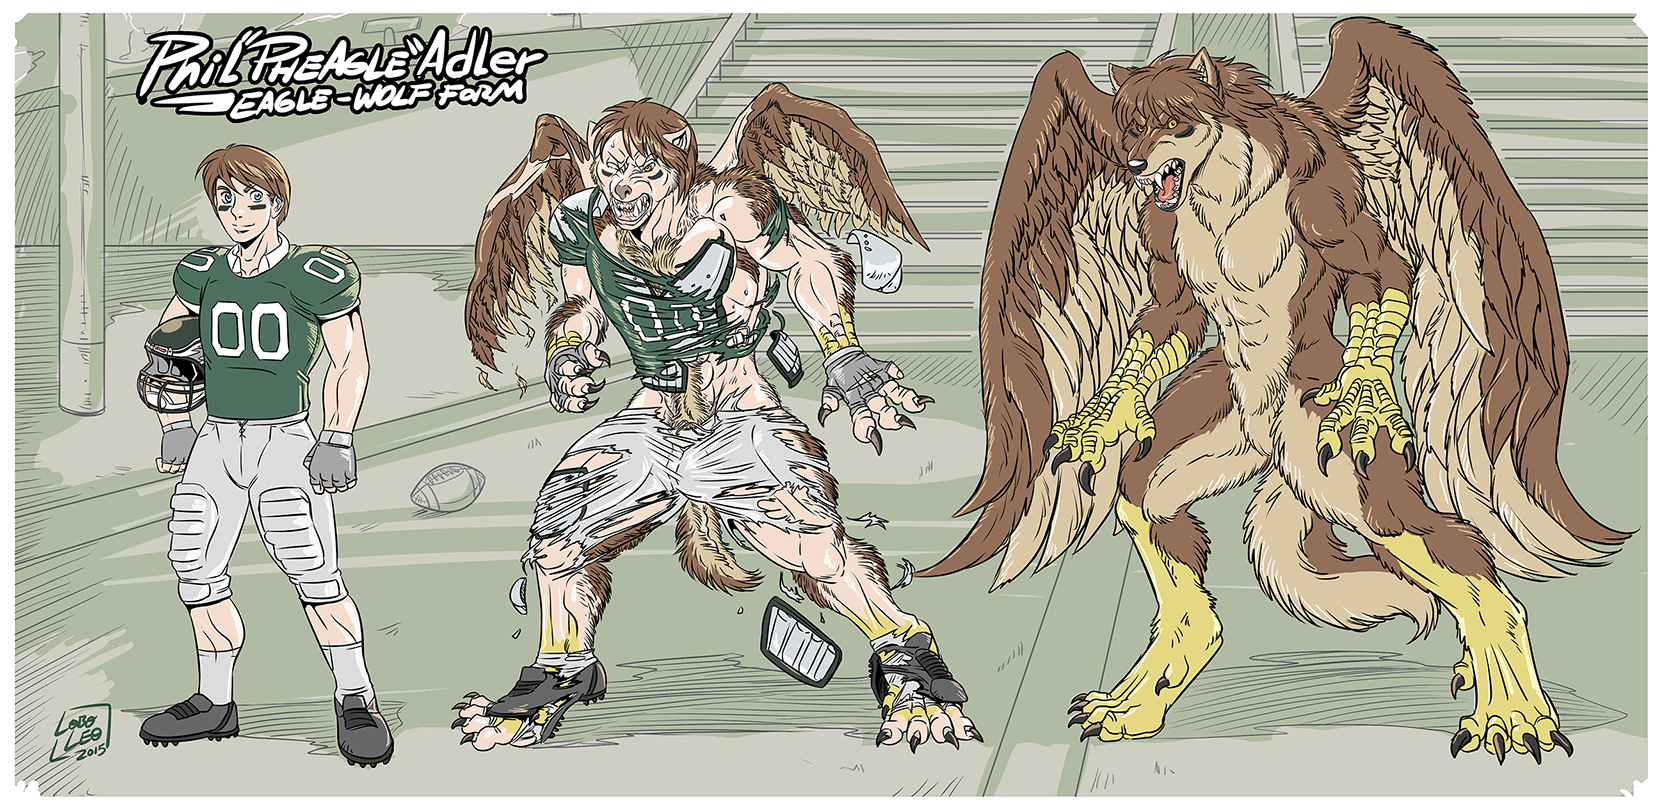 Phil "Pheagle" Adler - Eagle-Wolf Form. 